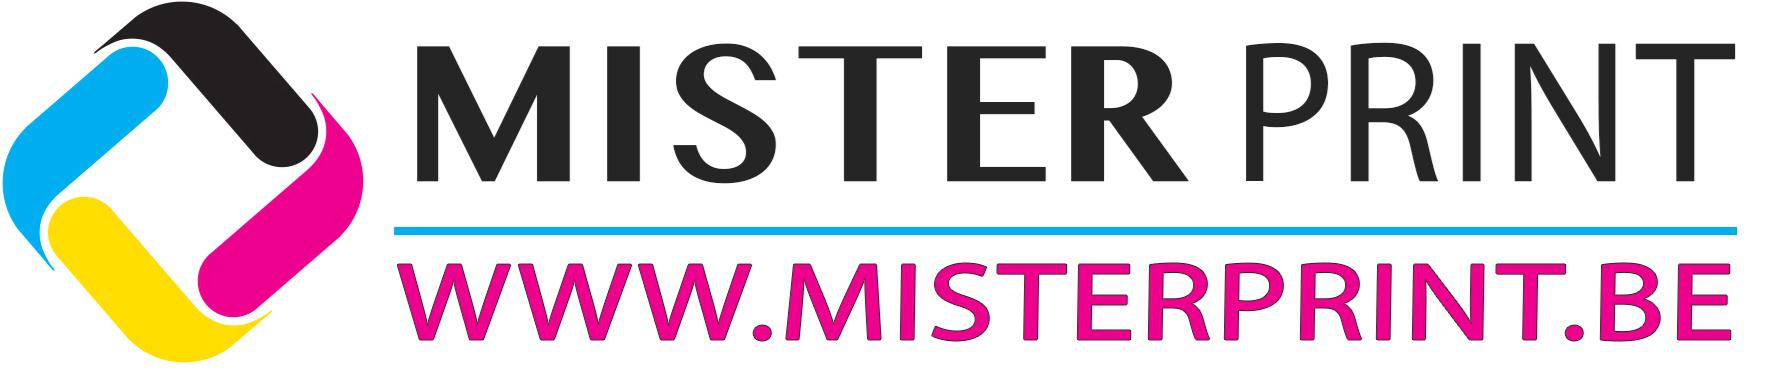 Misterprint Logo